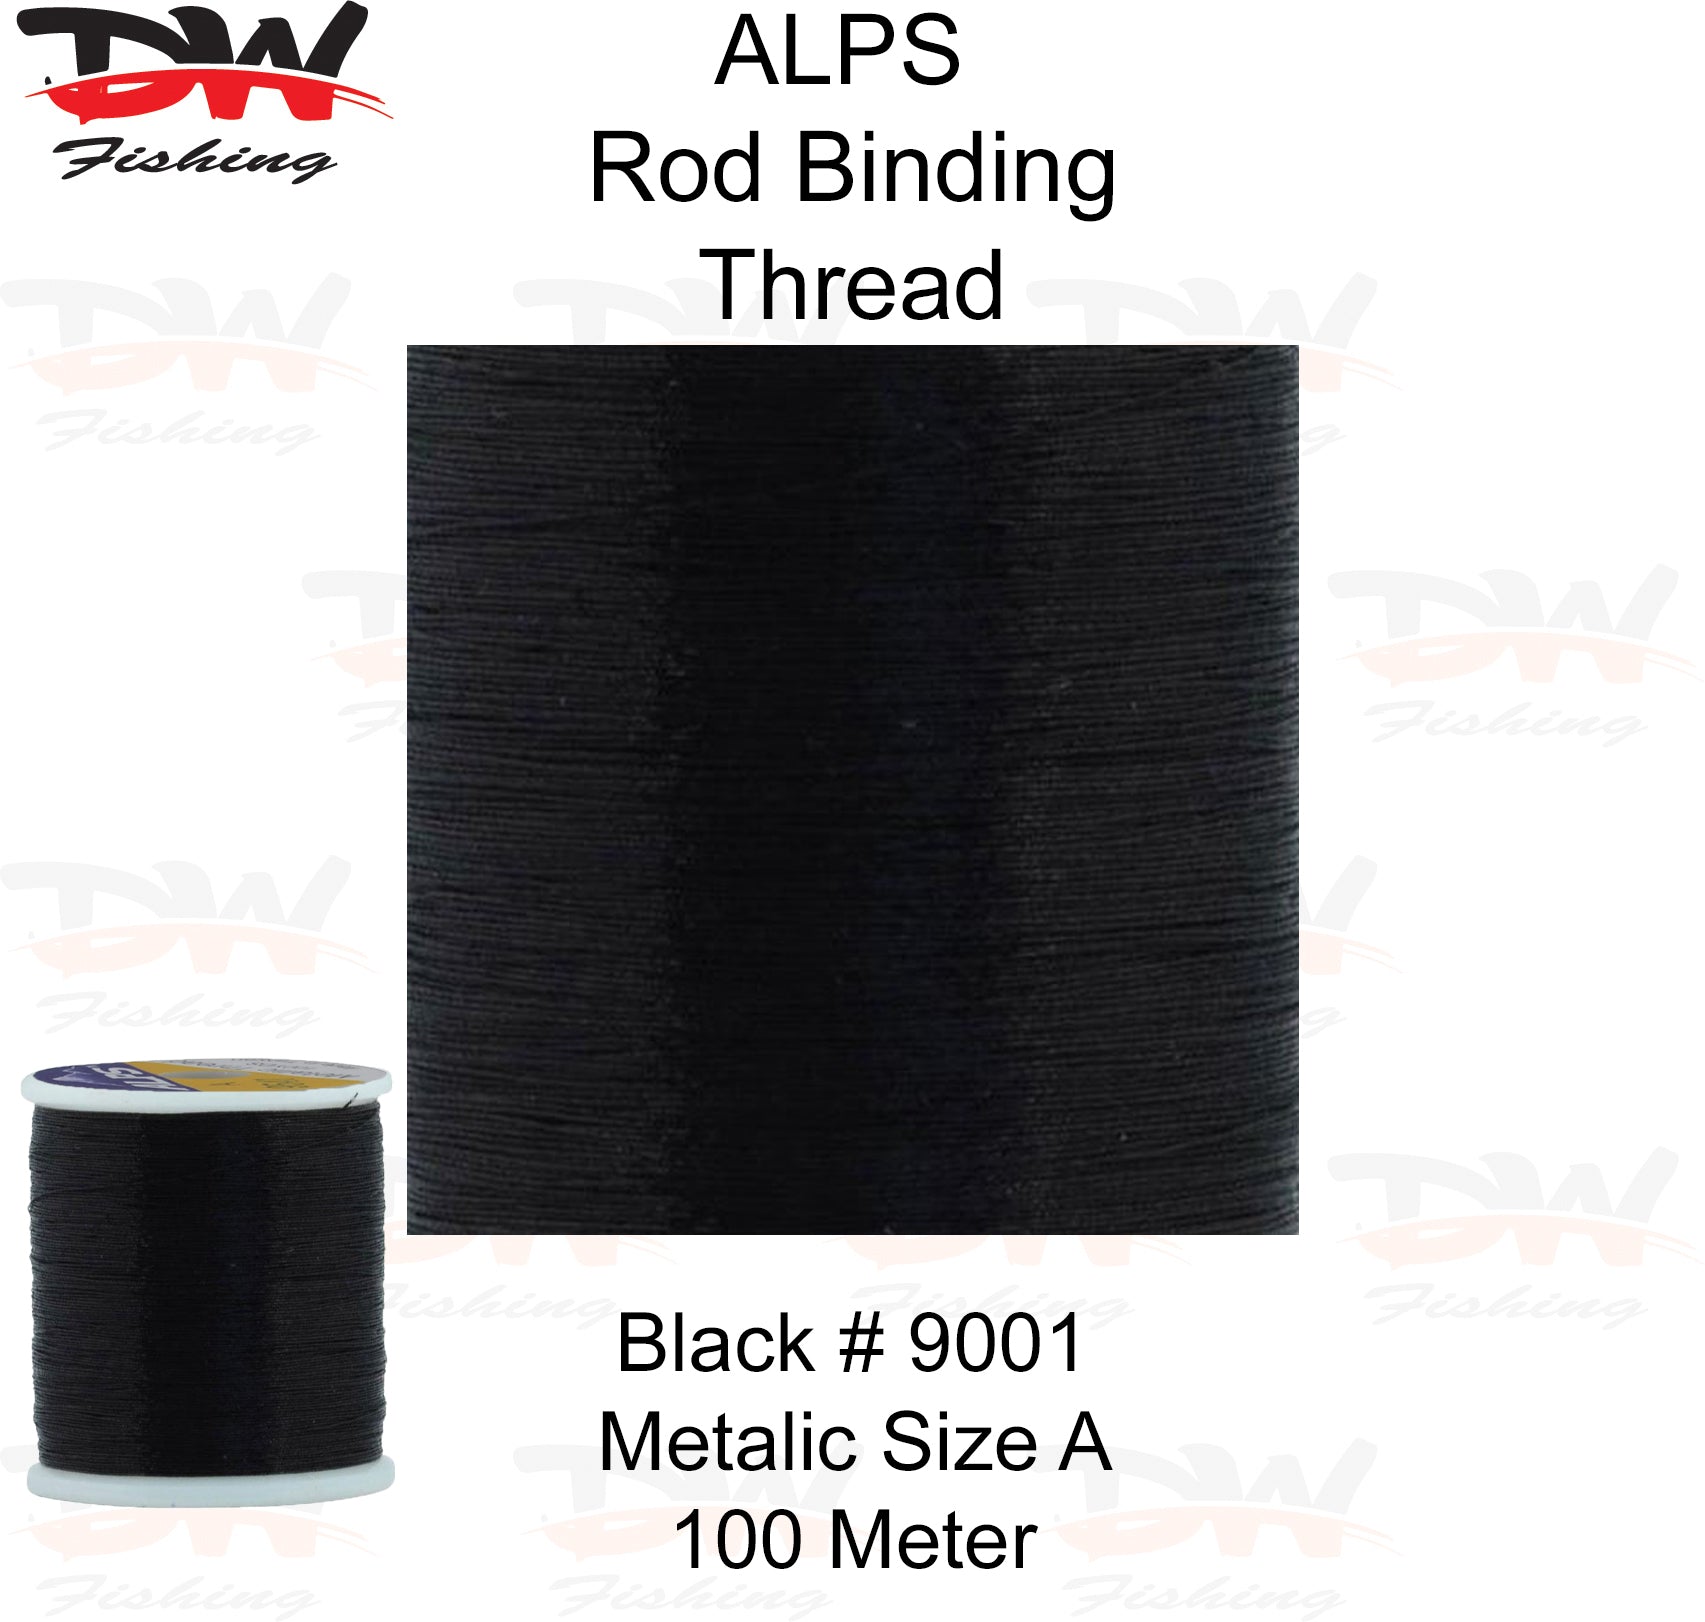 ALPS metalic rod binding thread Black